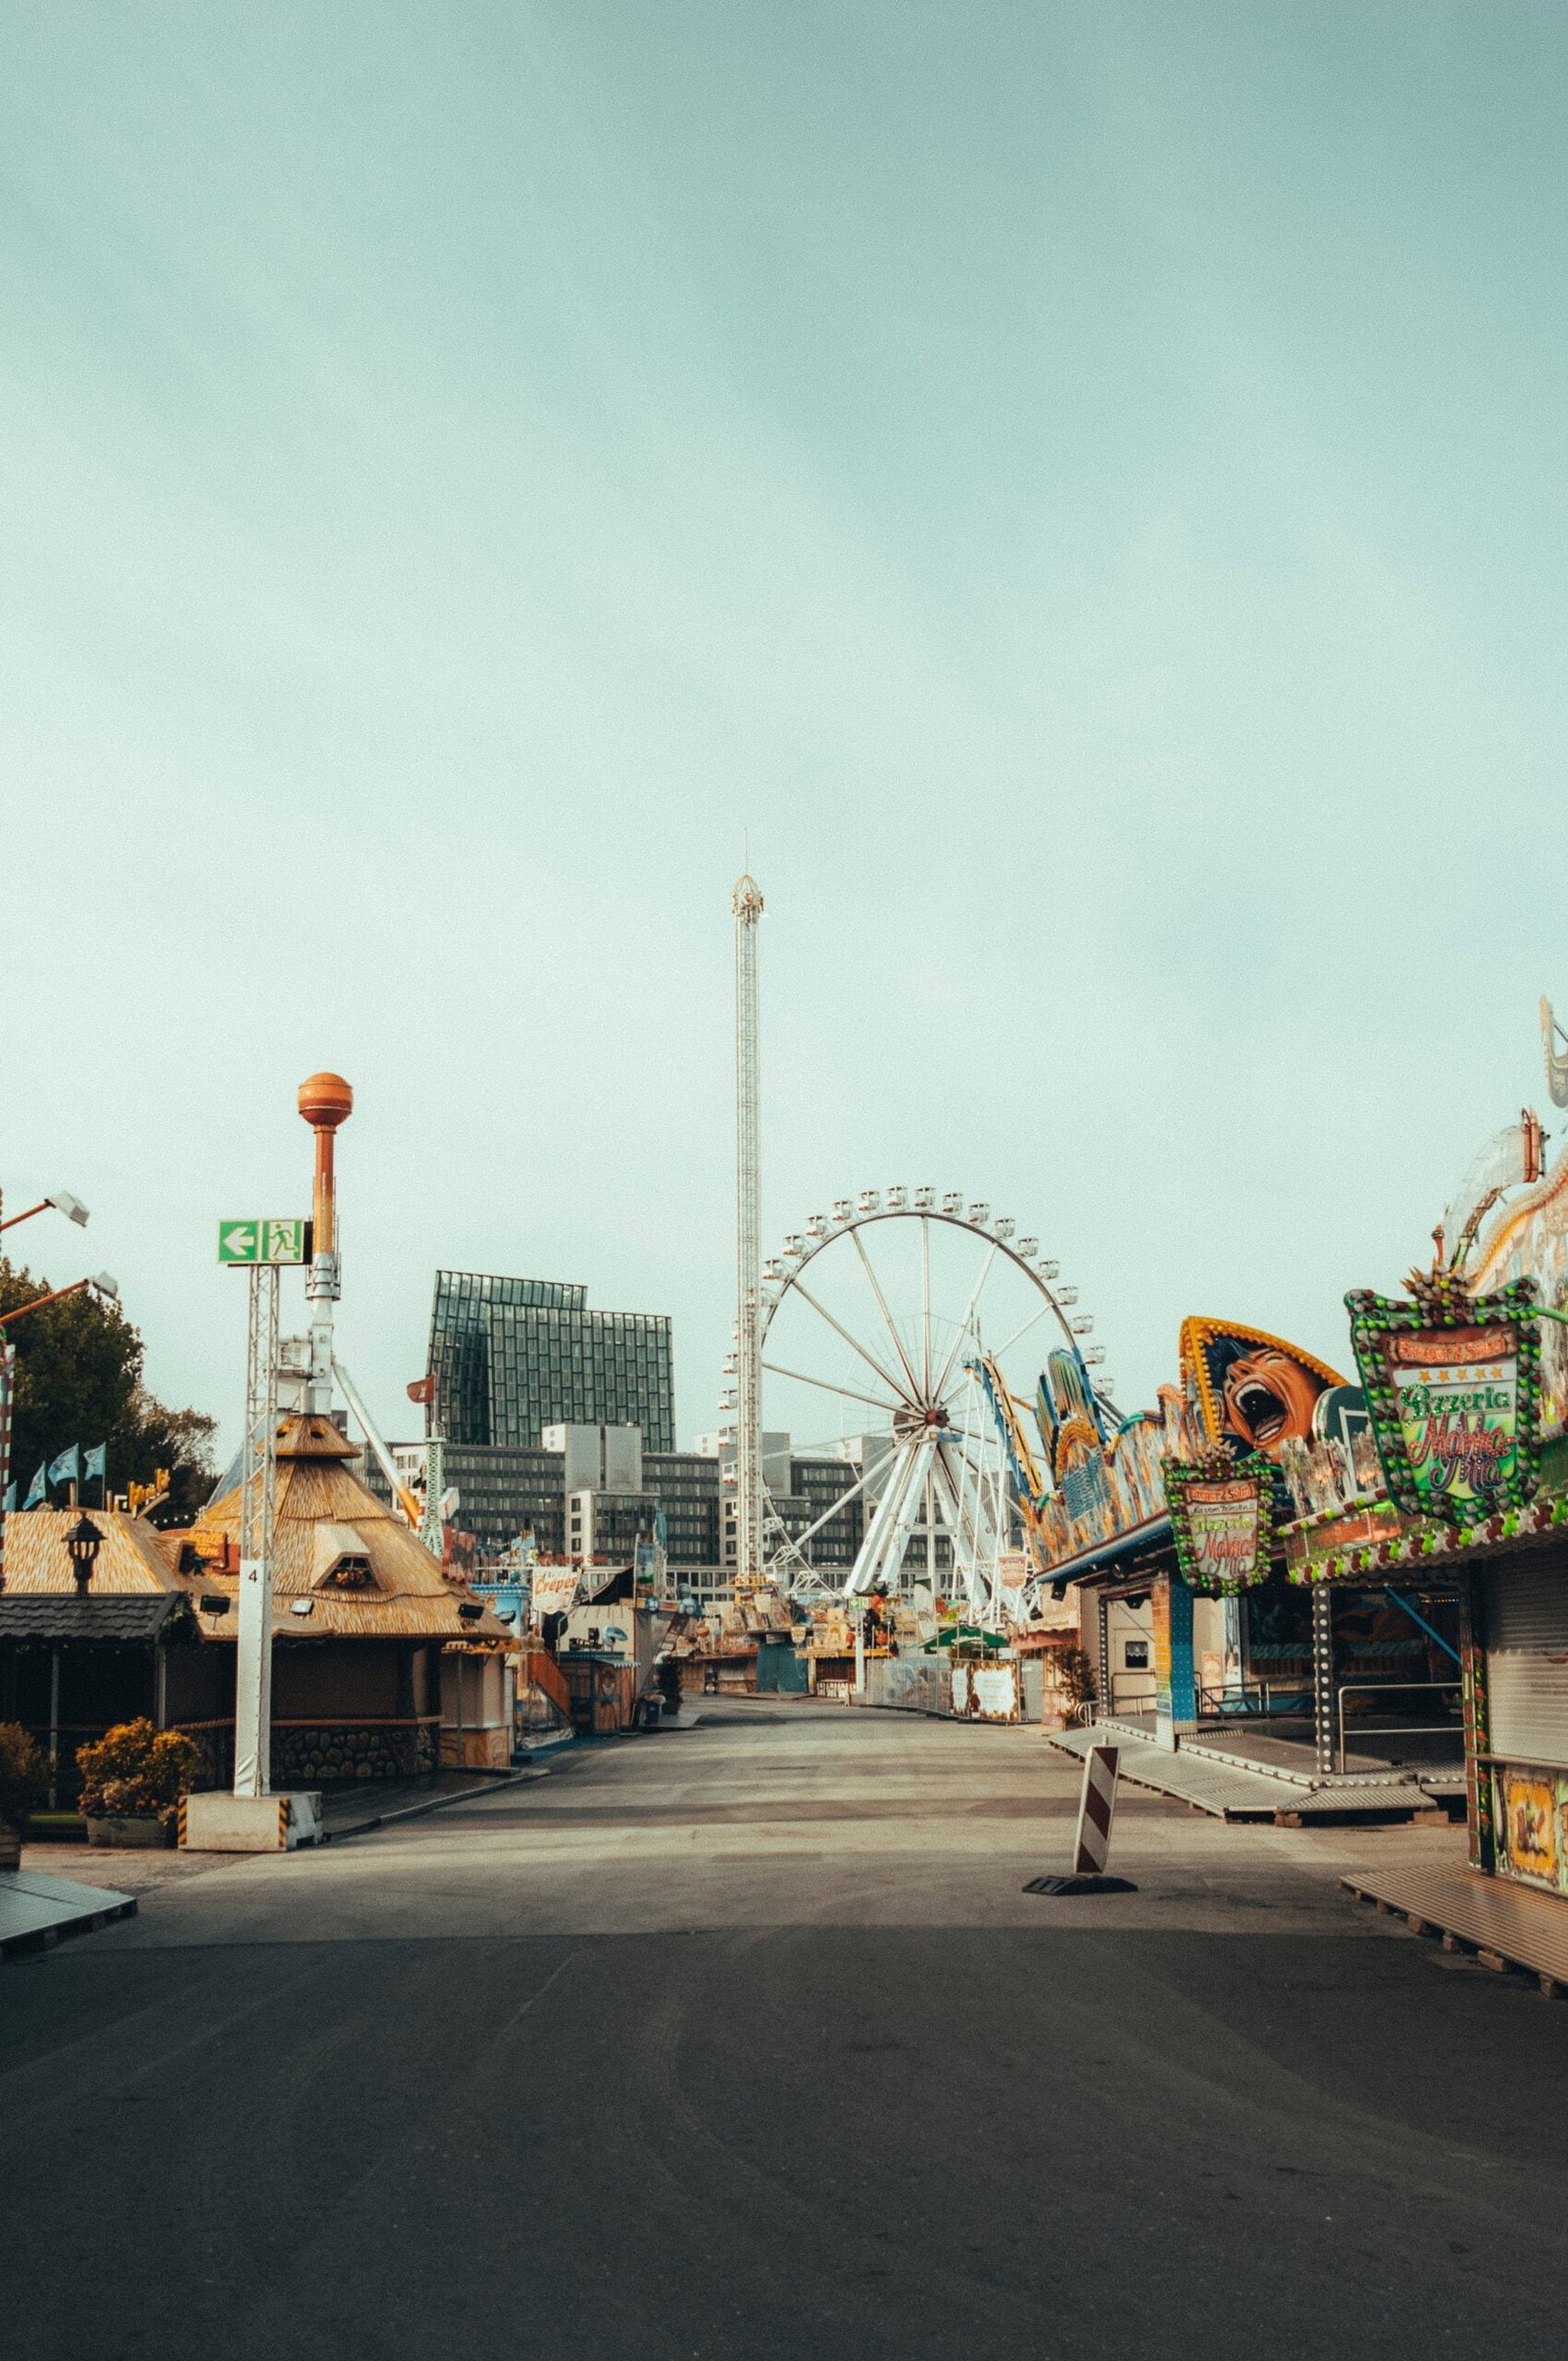 A dreamy and empty amusement park